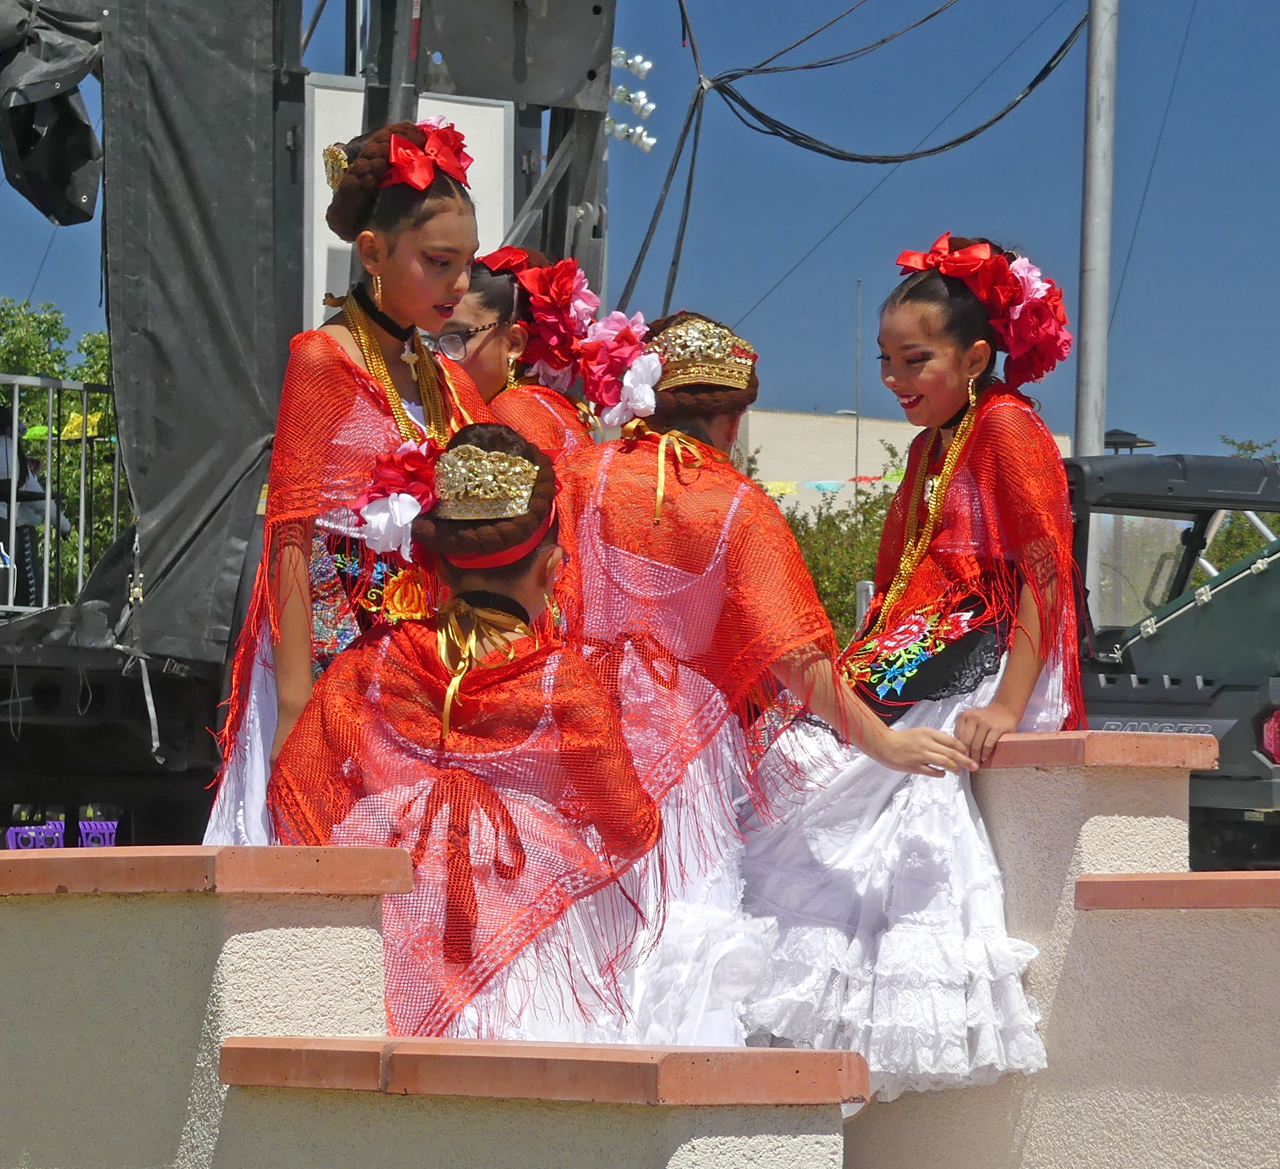 fiesta latina dancers